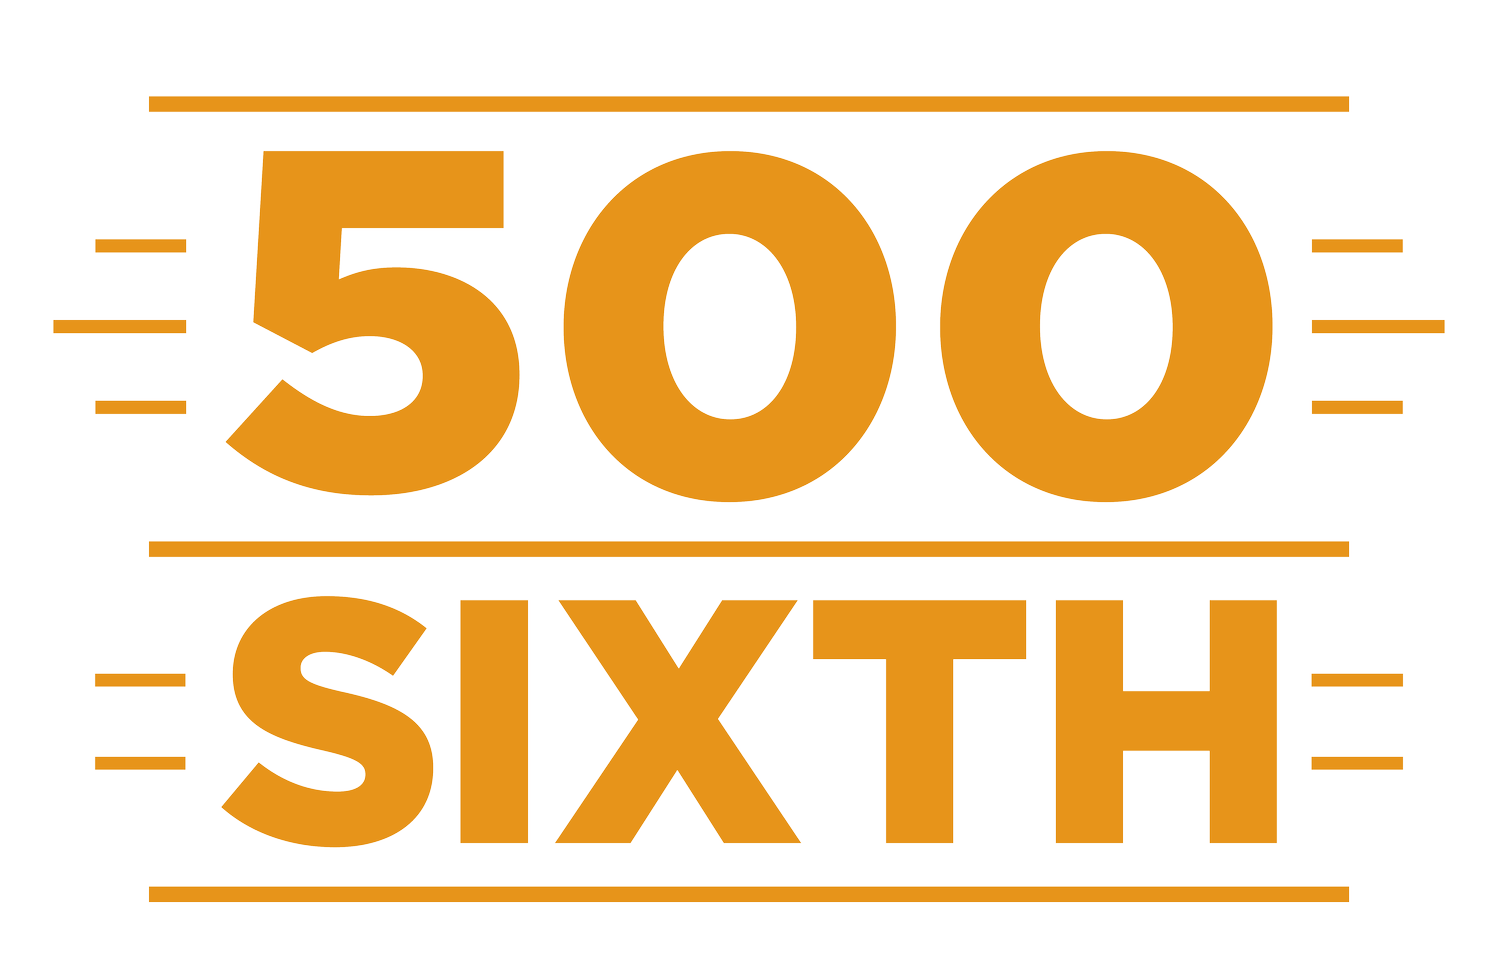 500 SIXTH